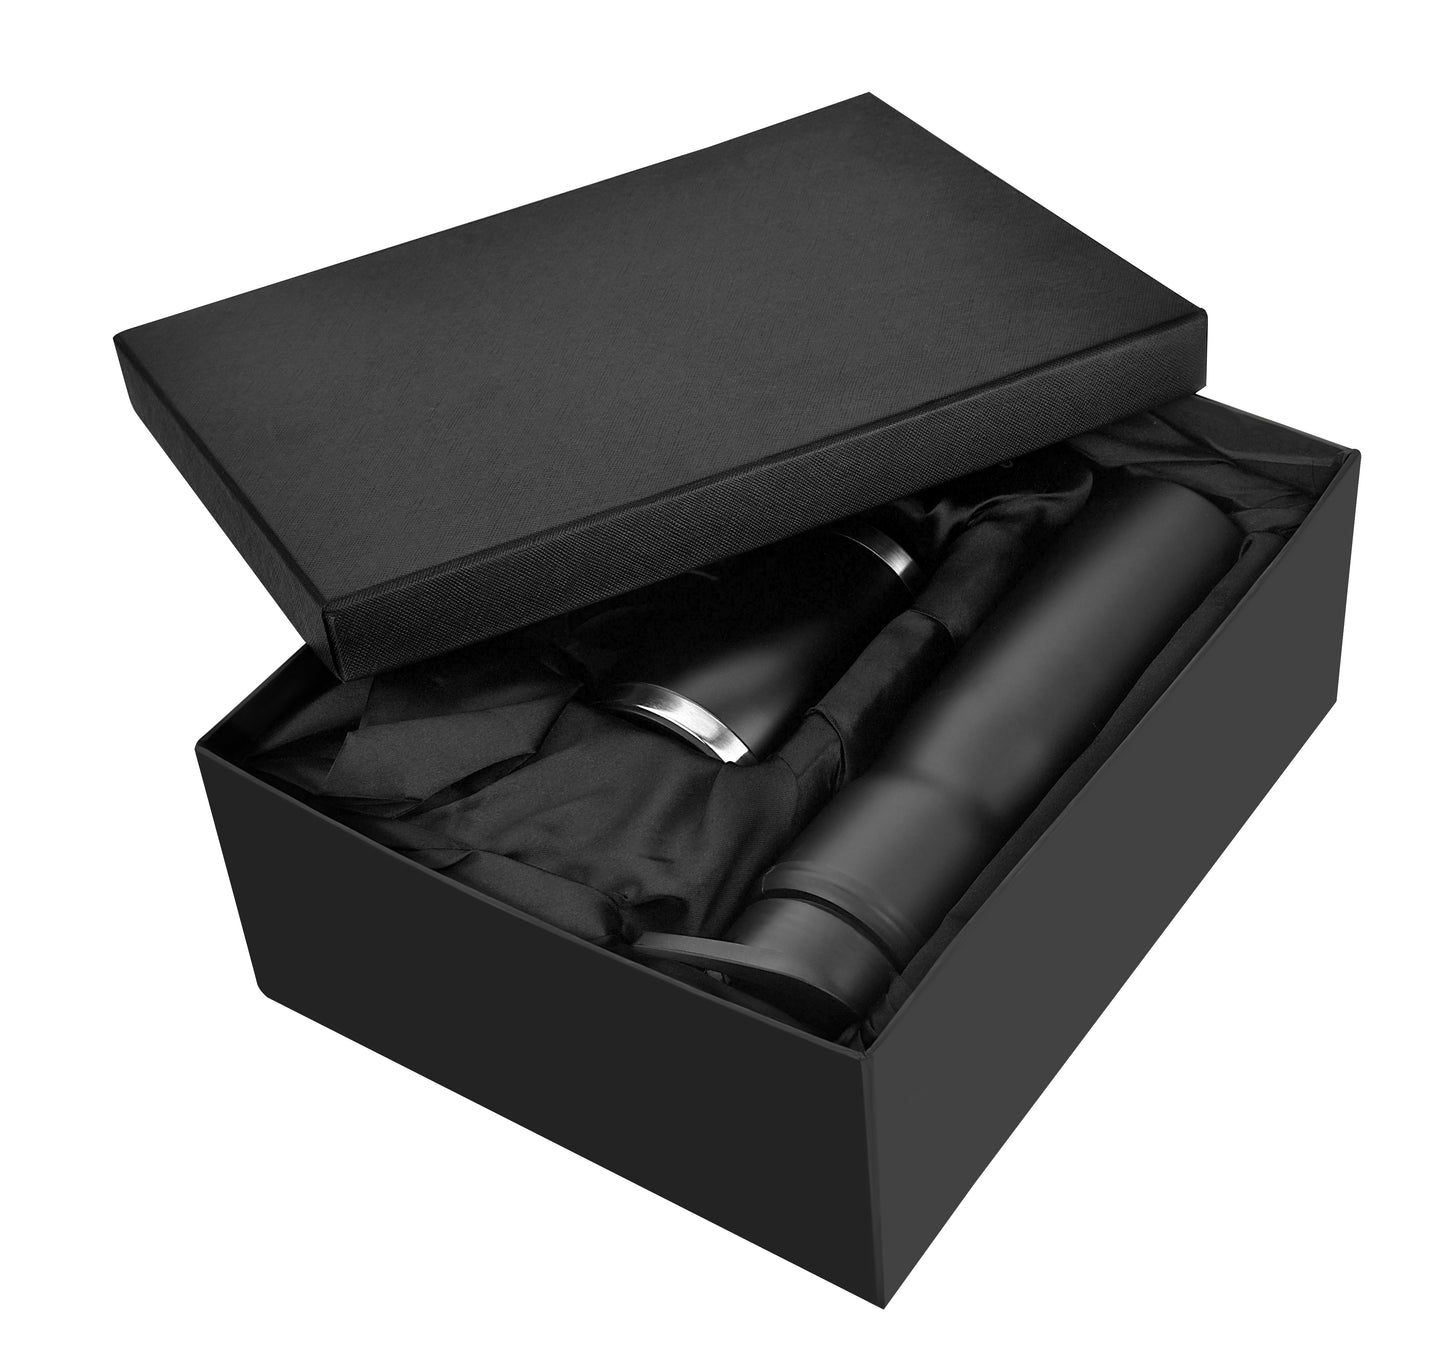 Black 6in1 Combo Gift Set Bottle, Mug, Pen, Keychain, Notebook, and Cardholder - For Employee Joining Kit, Corporate, Client or Dealer Gifting JKSR176